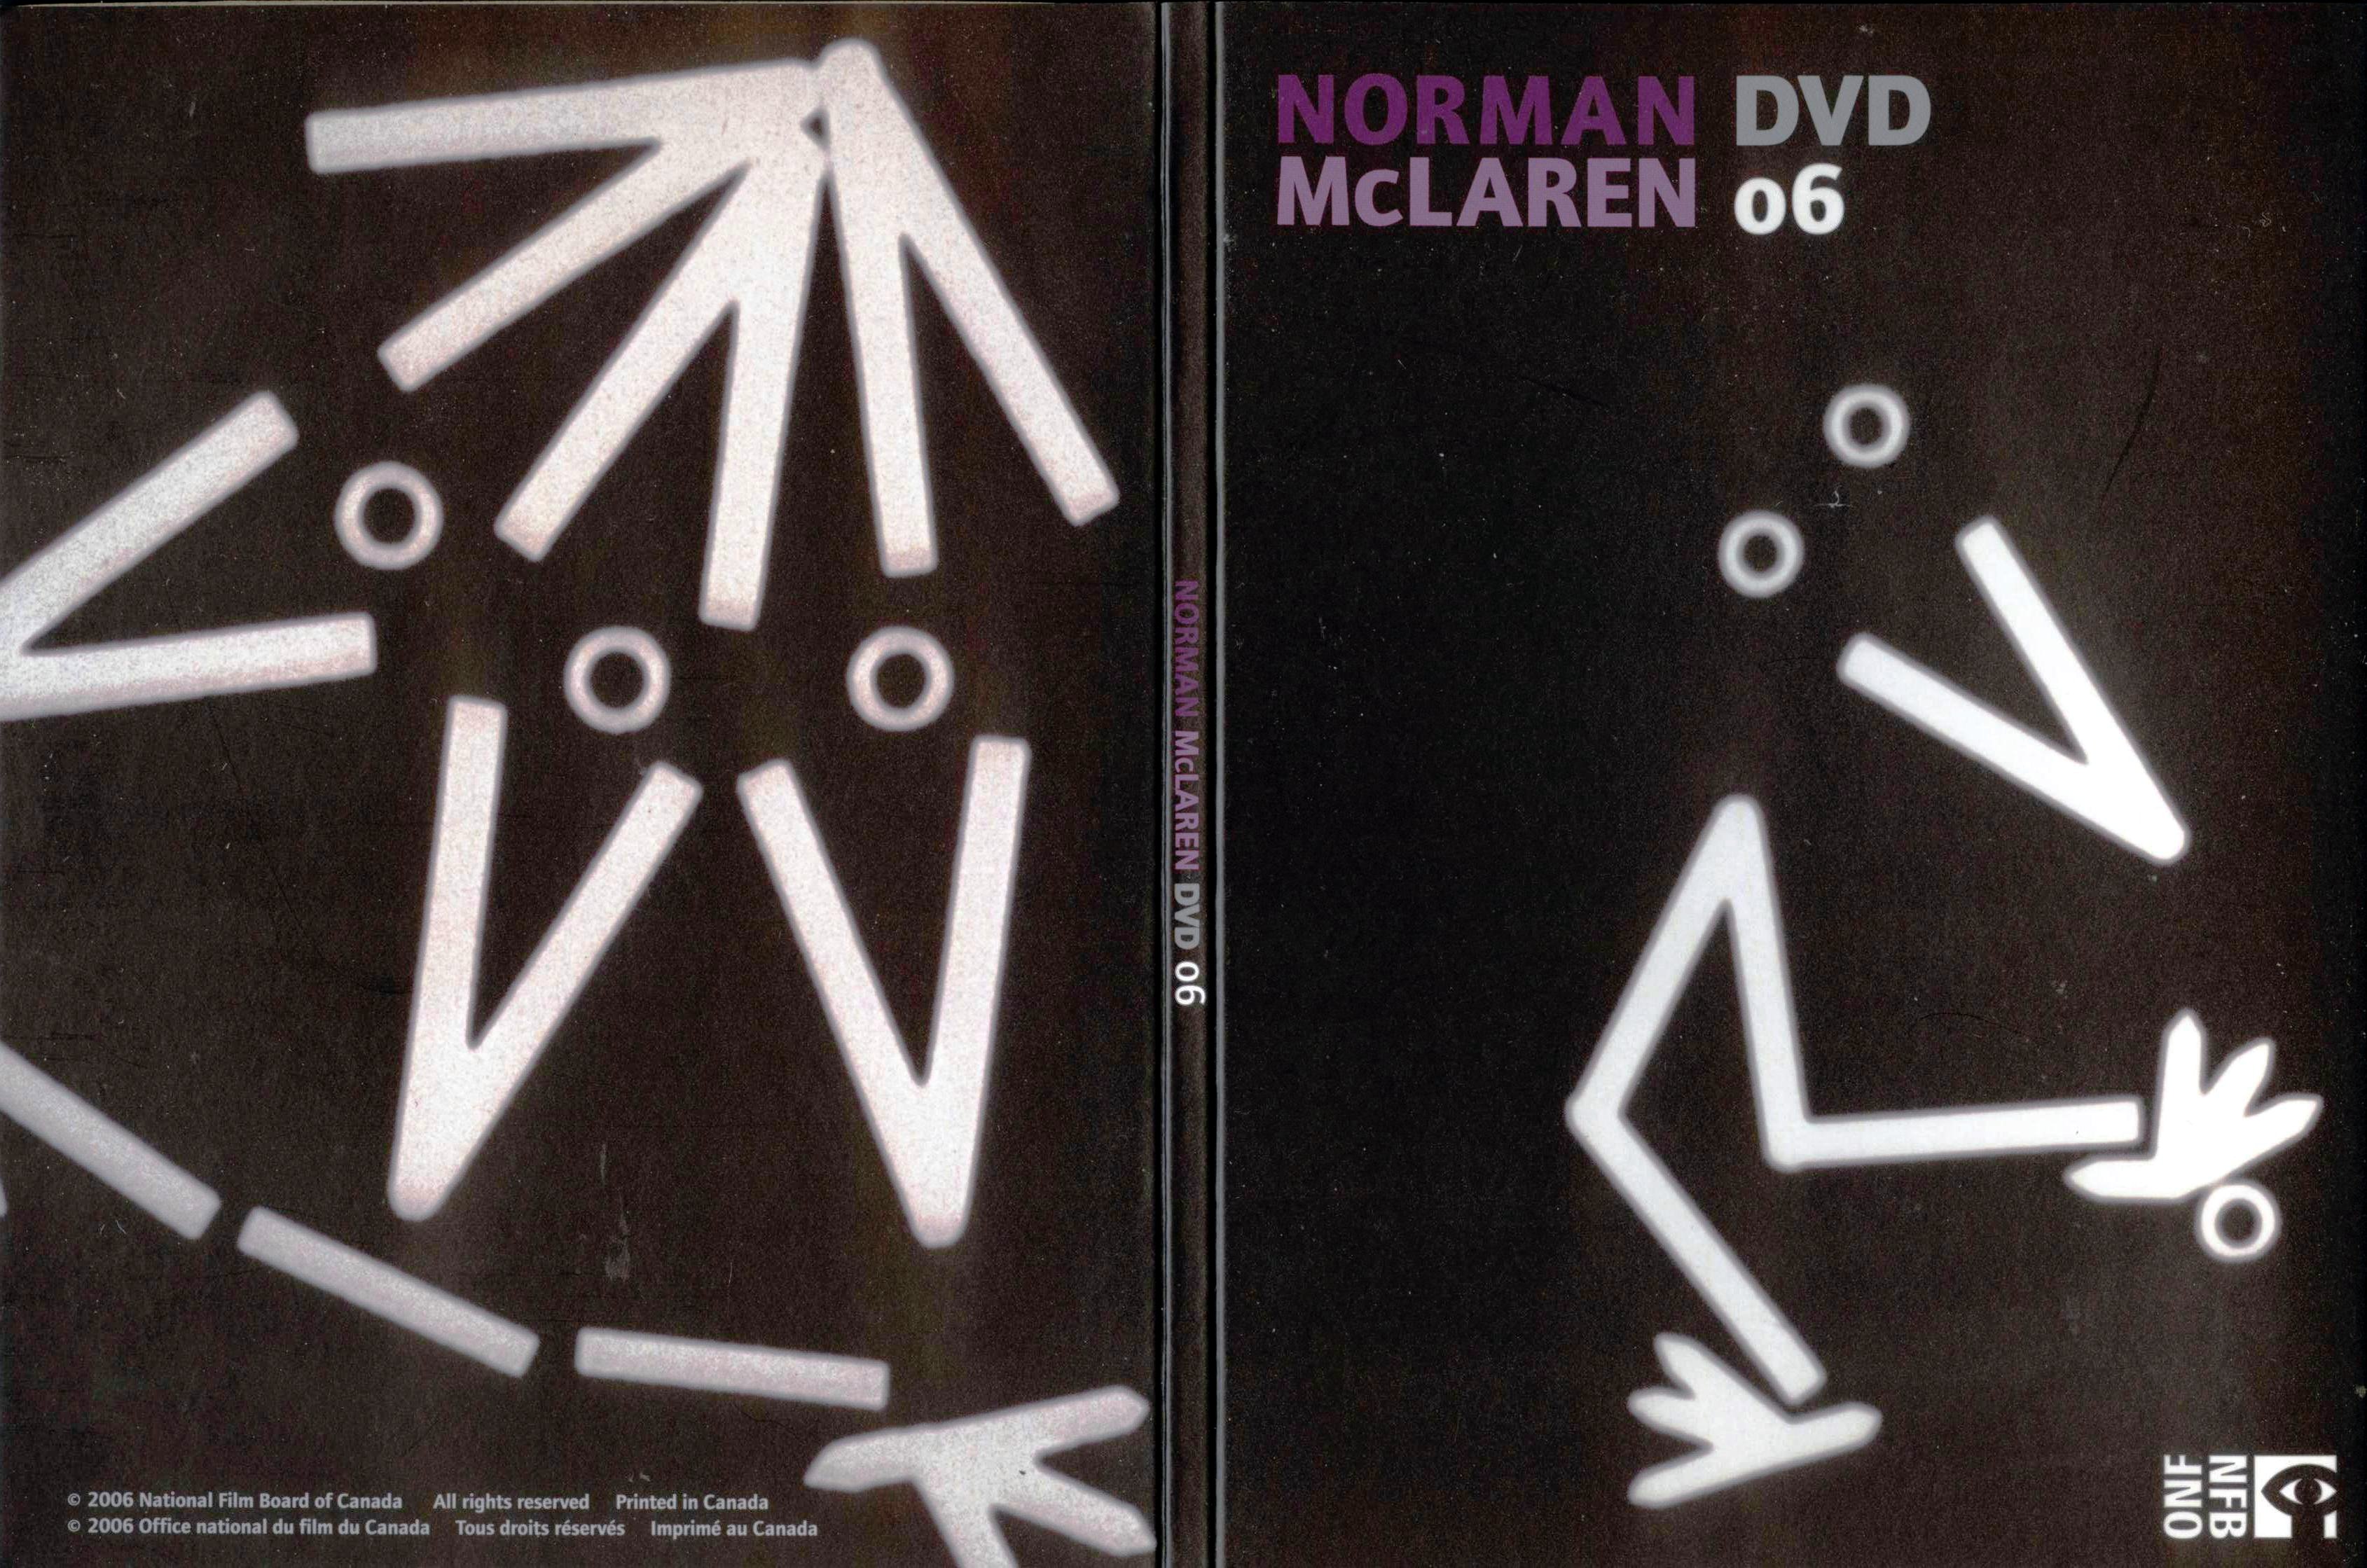 Jaquette DVD Norman McLaren DVD 6